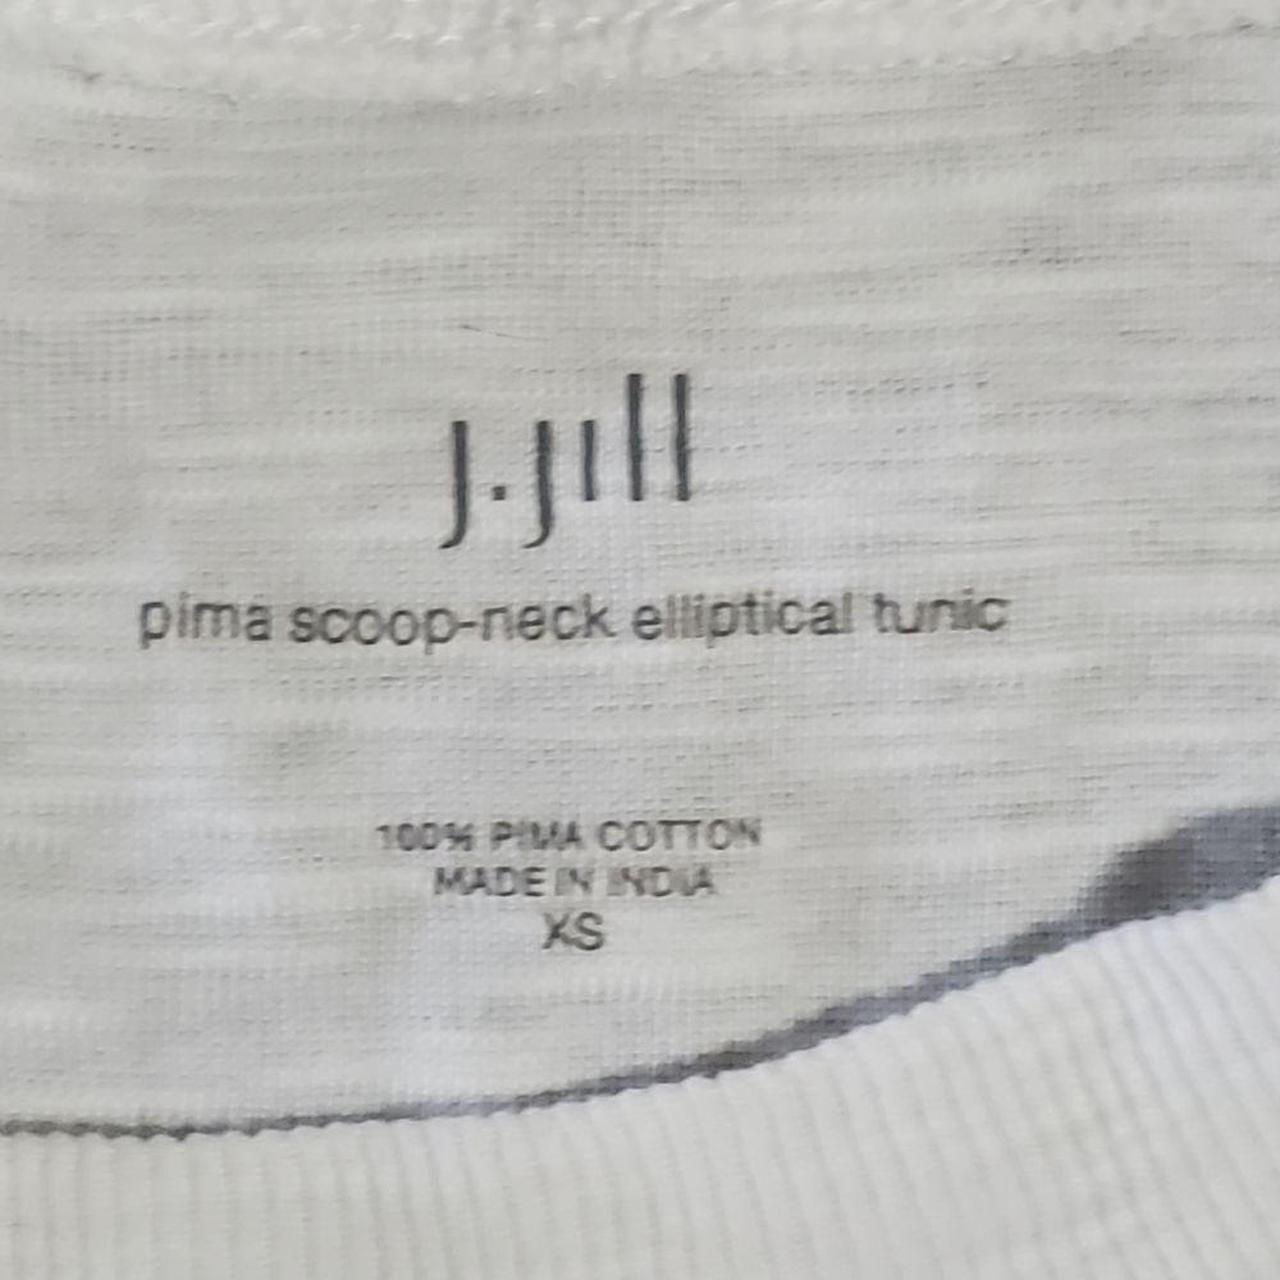 J. Jill White Pima Cotton Scoopneck Elliptical Tunic - Depop